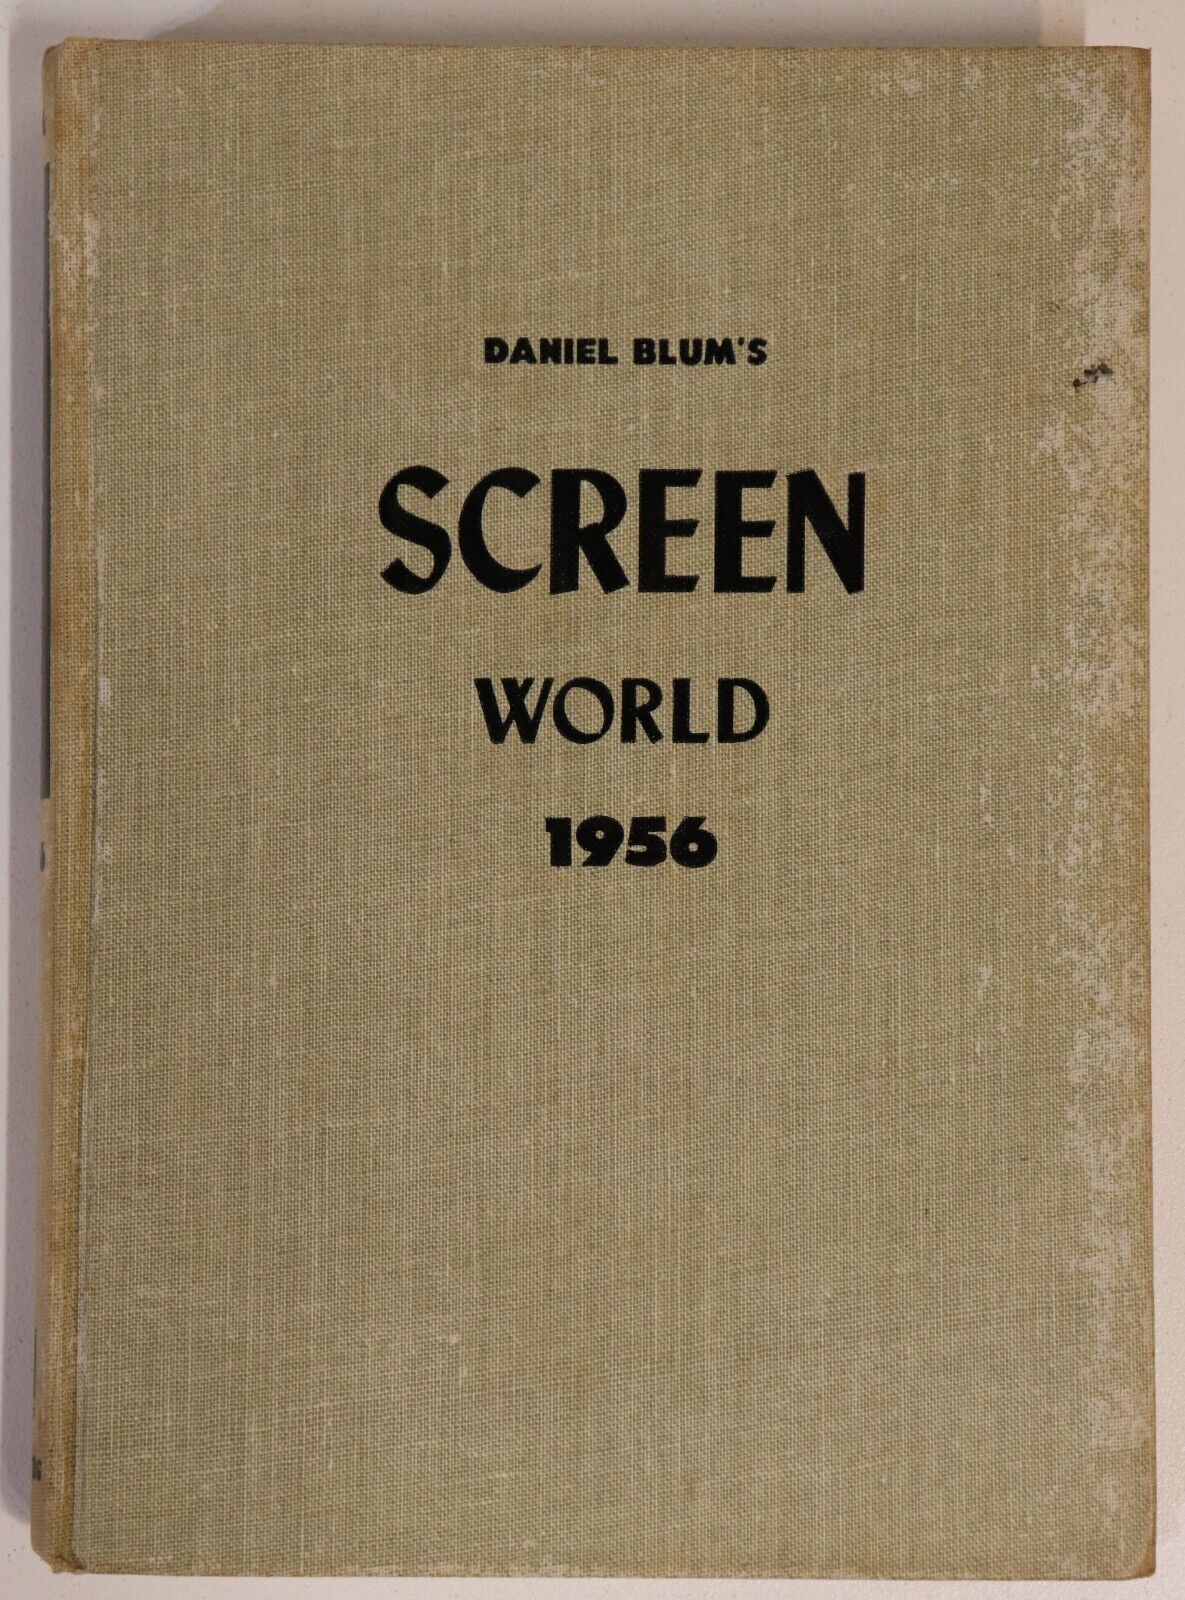 Daniel Blum's Screen World - 1956 - Vintage Film & Cinema History Book